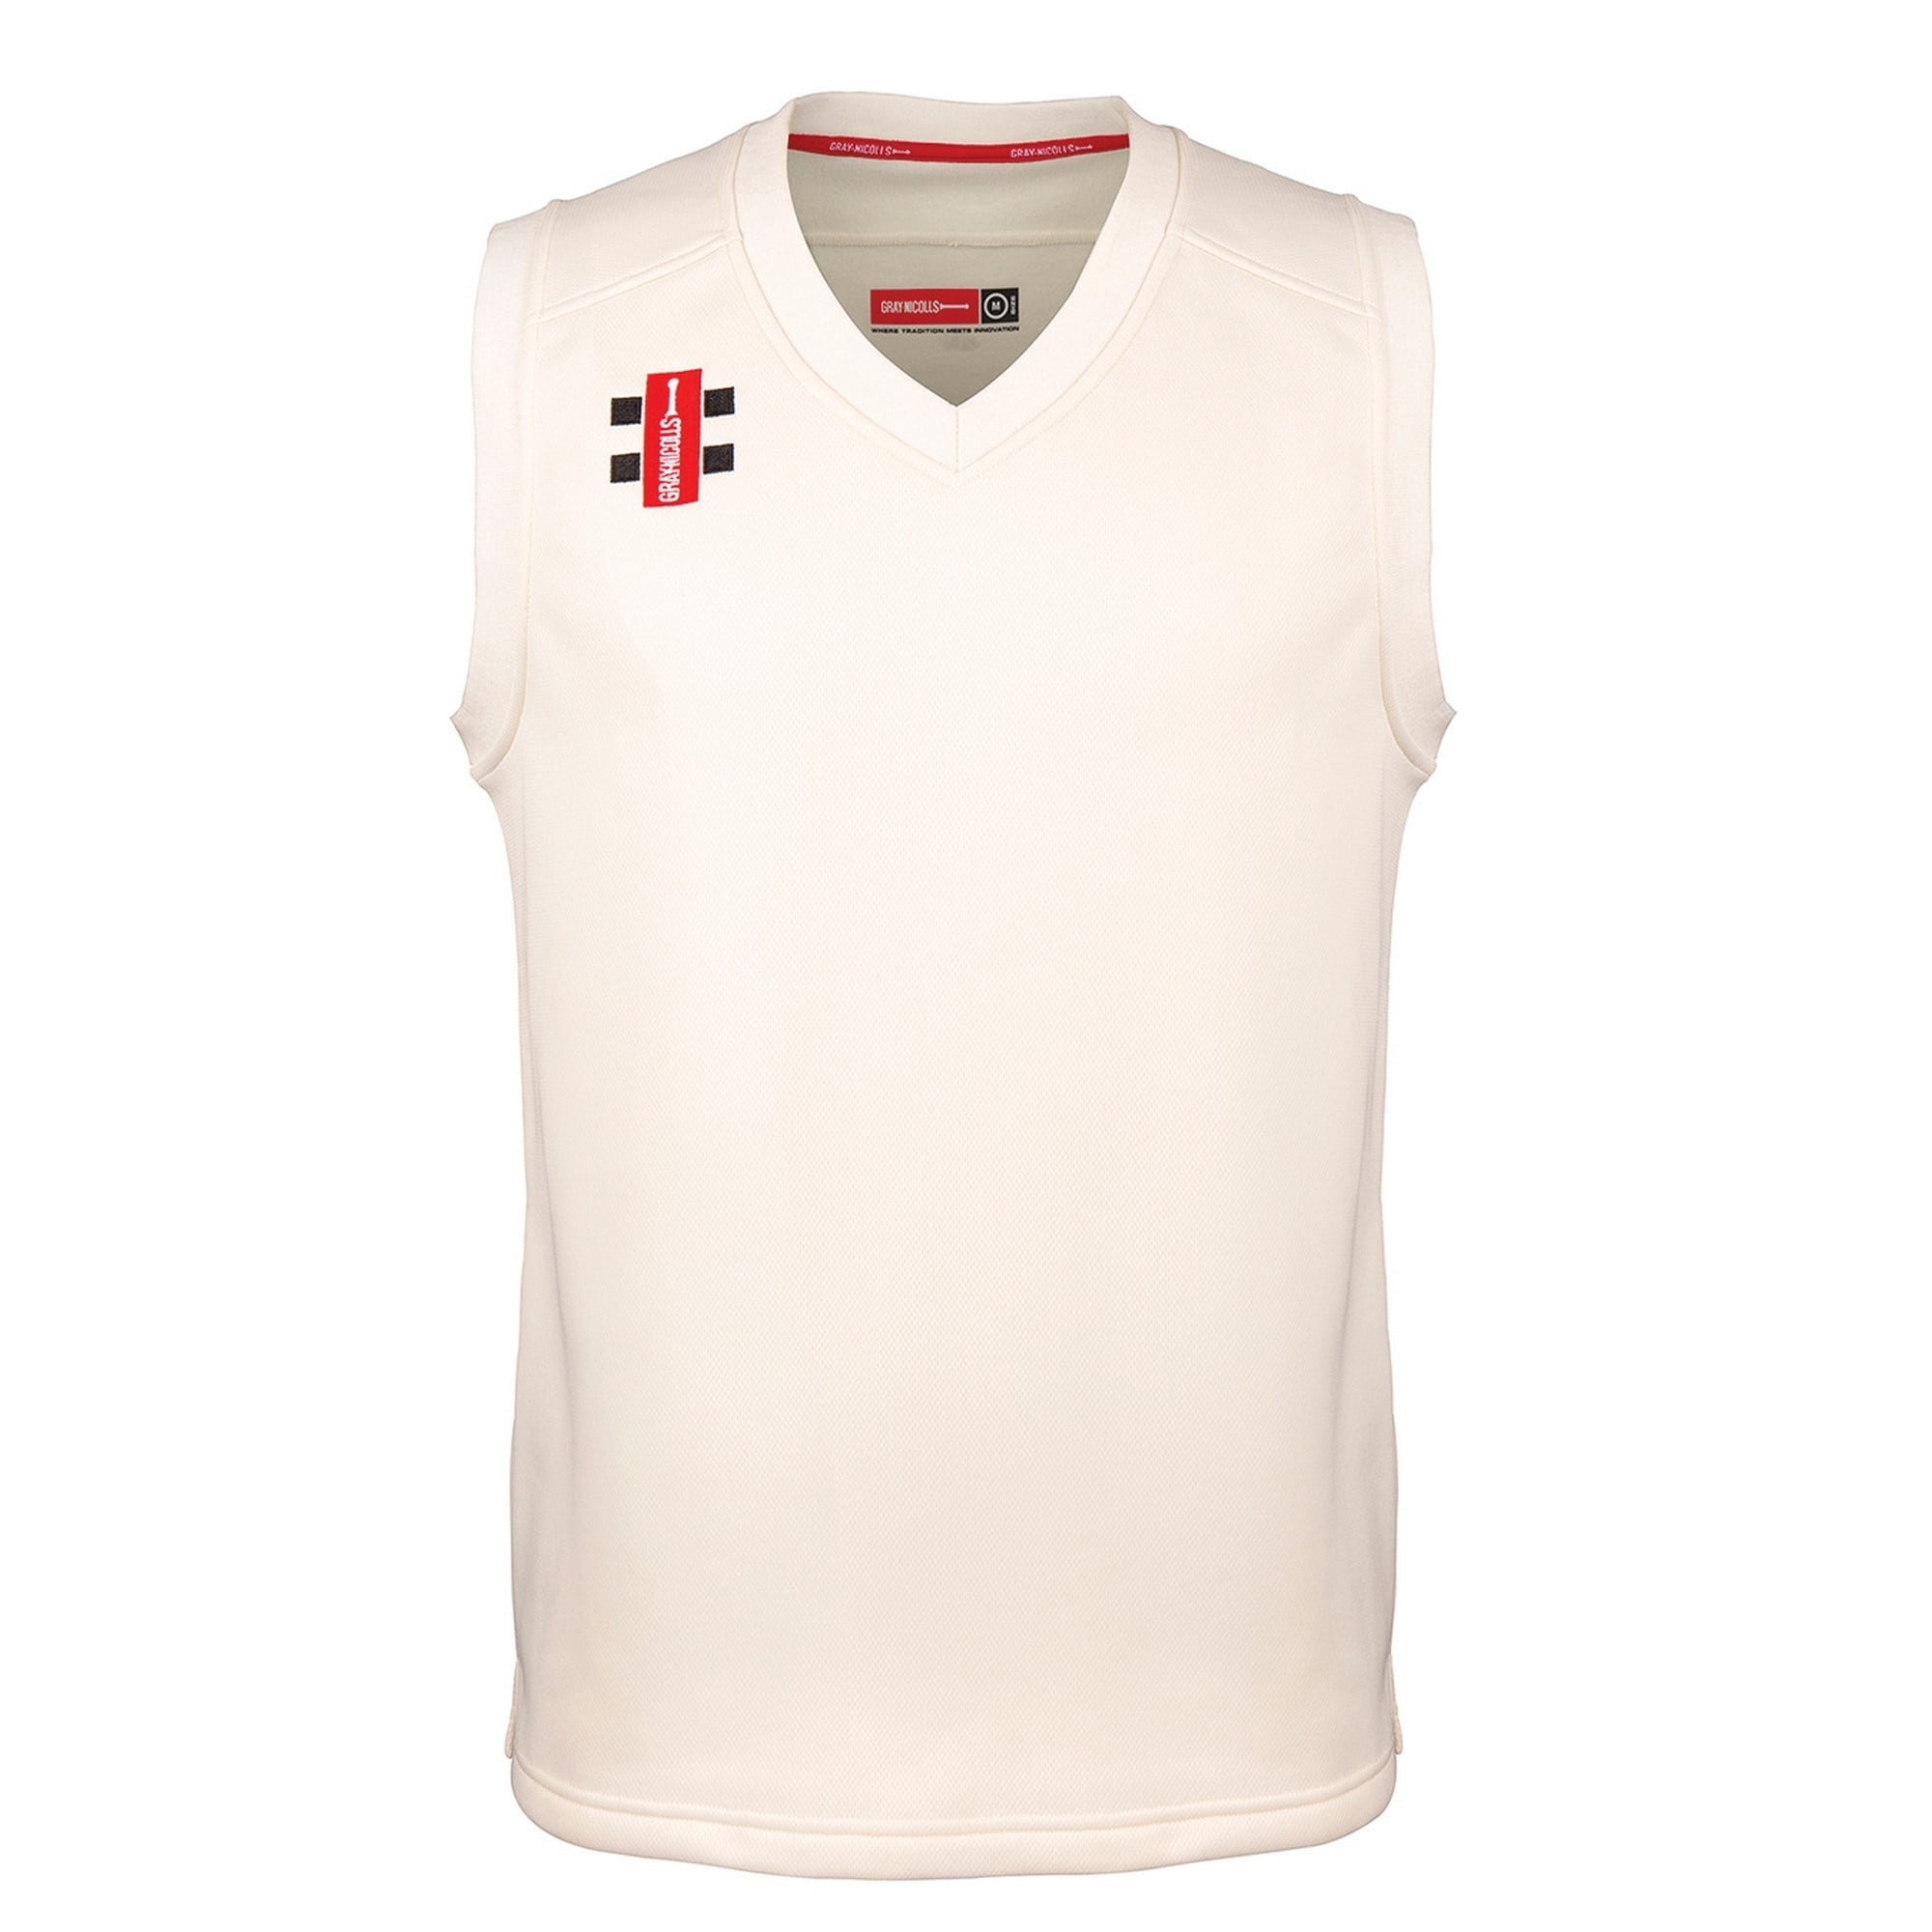 Gray Nicolls T20 Cricket Gym Sports Short Sleeve Tee T-Shirt Top All Sizes 